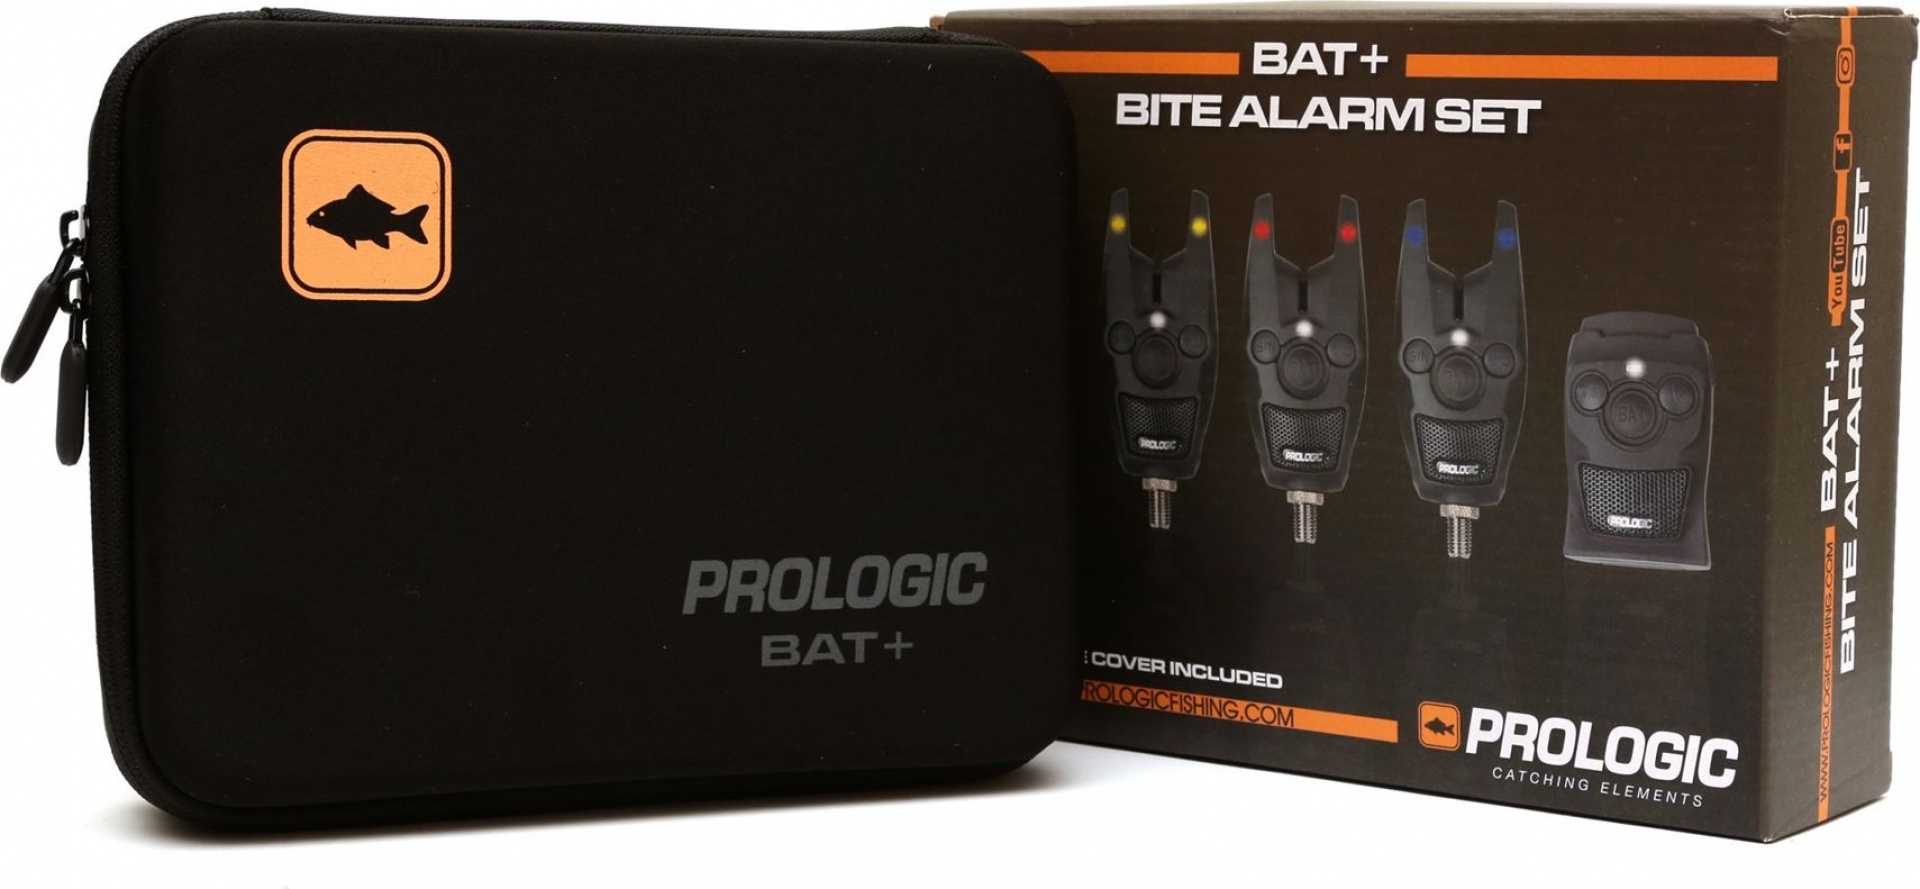 Prologic BAT+ Bite Alarm Set